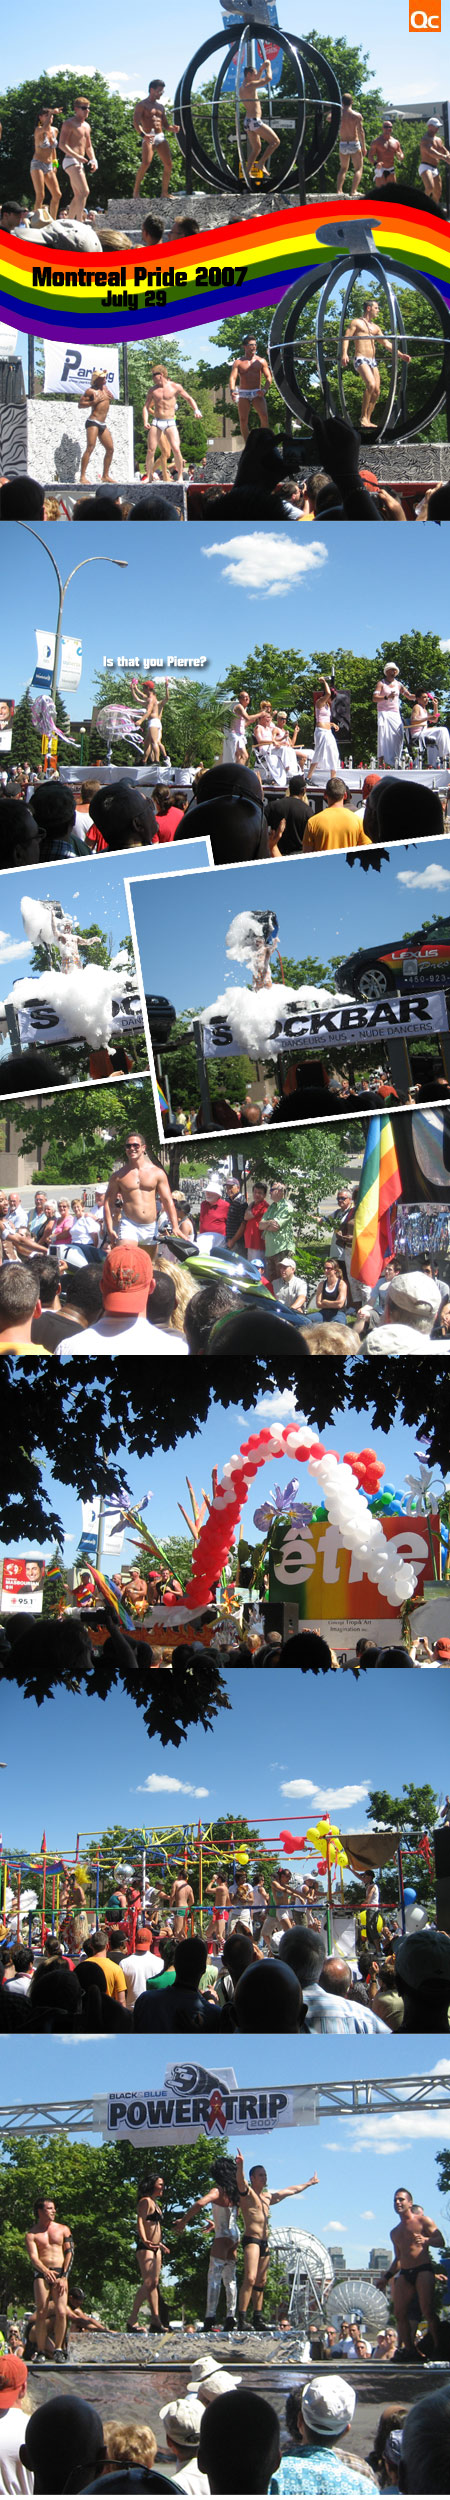 Montreal Pride 2007